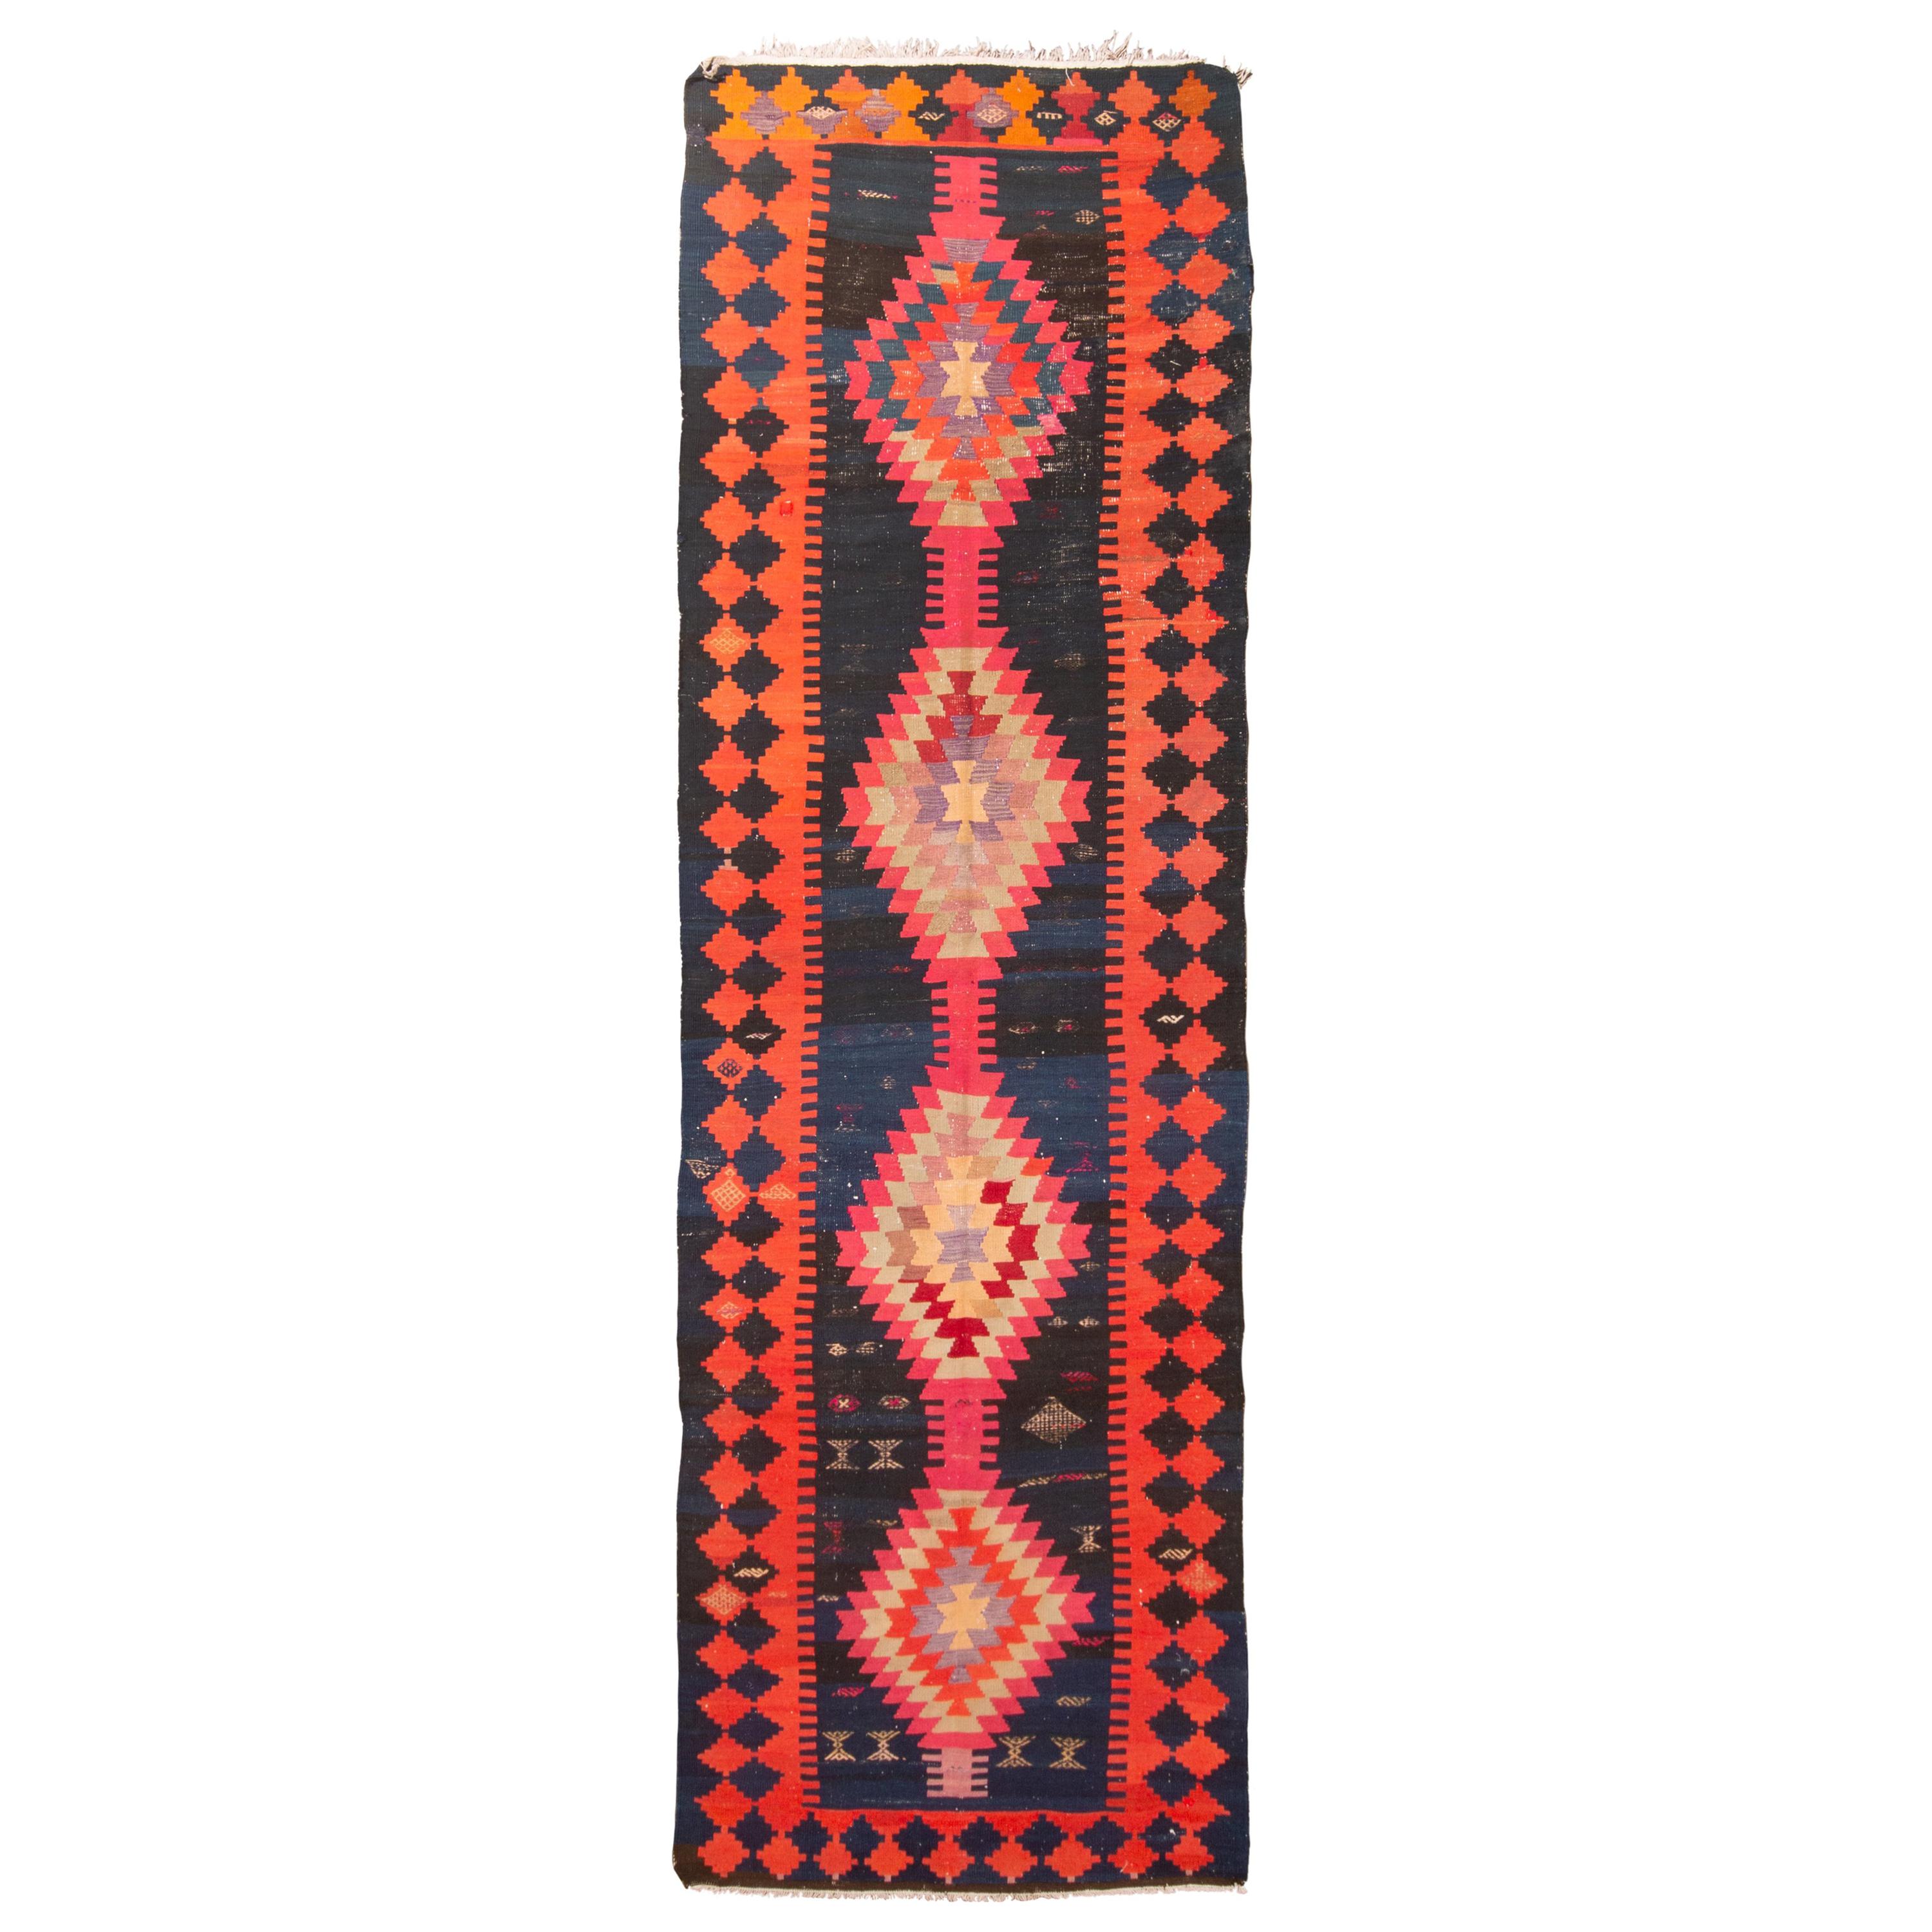 Antique Persian Pink and Orange Wool Kilim Rug with Warding Eye Motifs